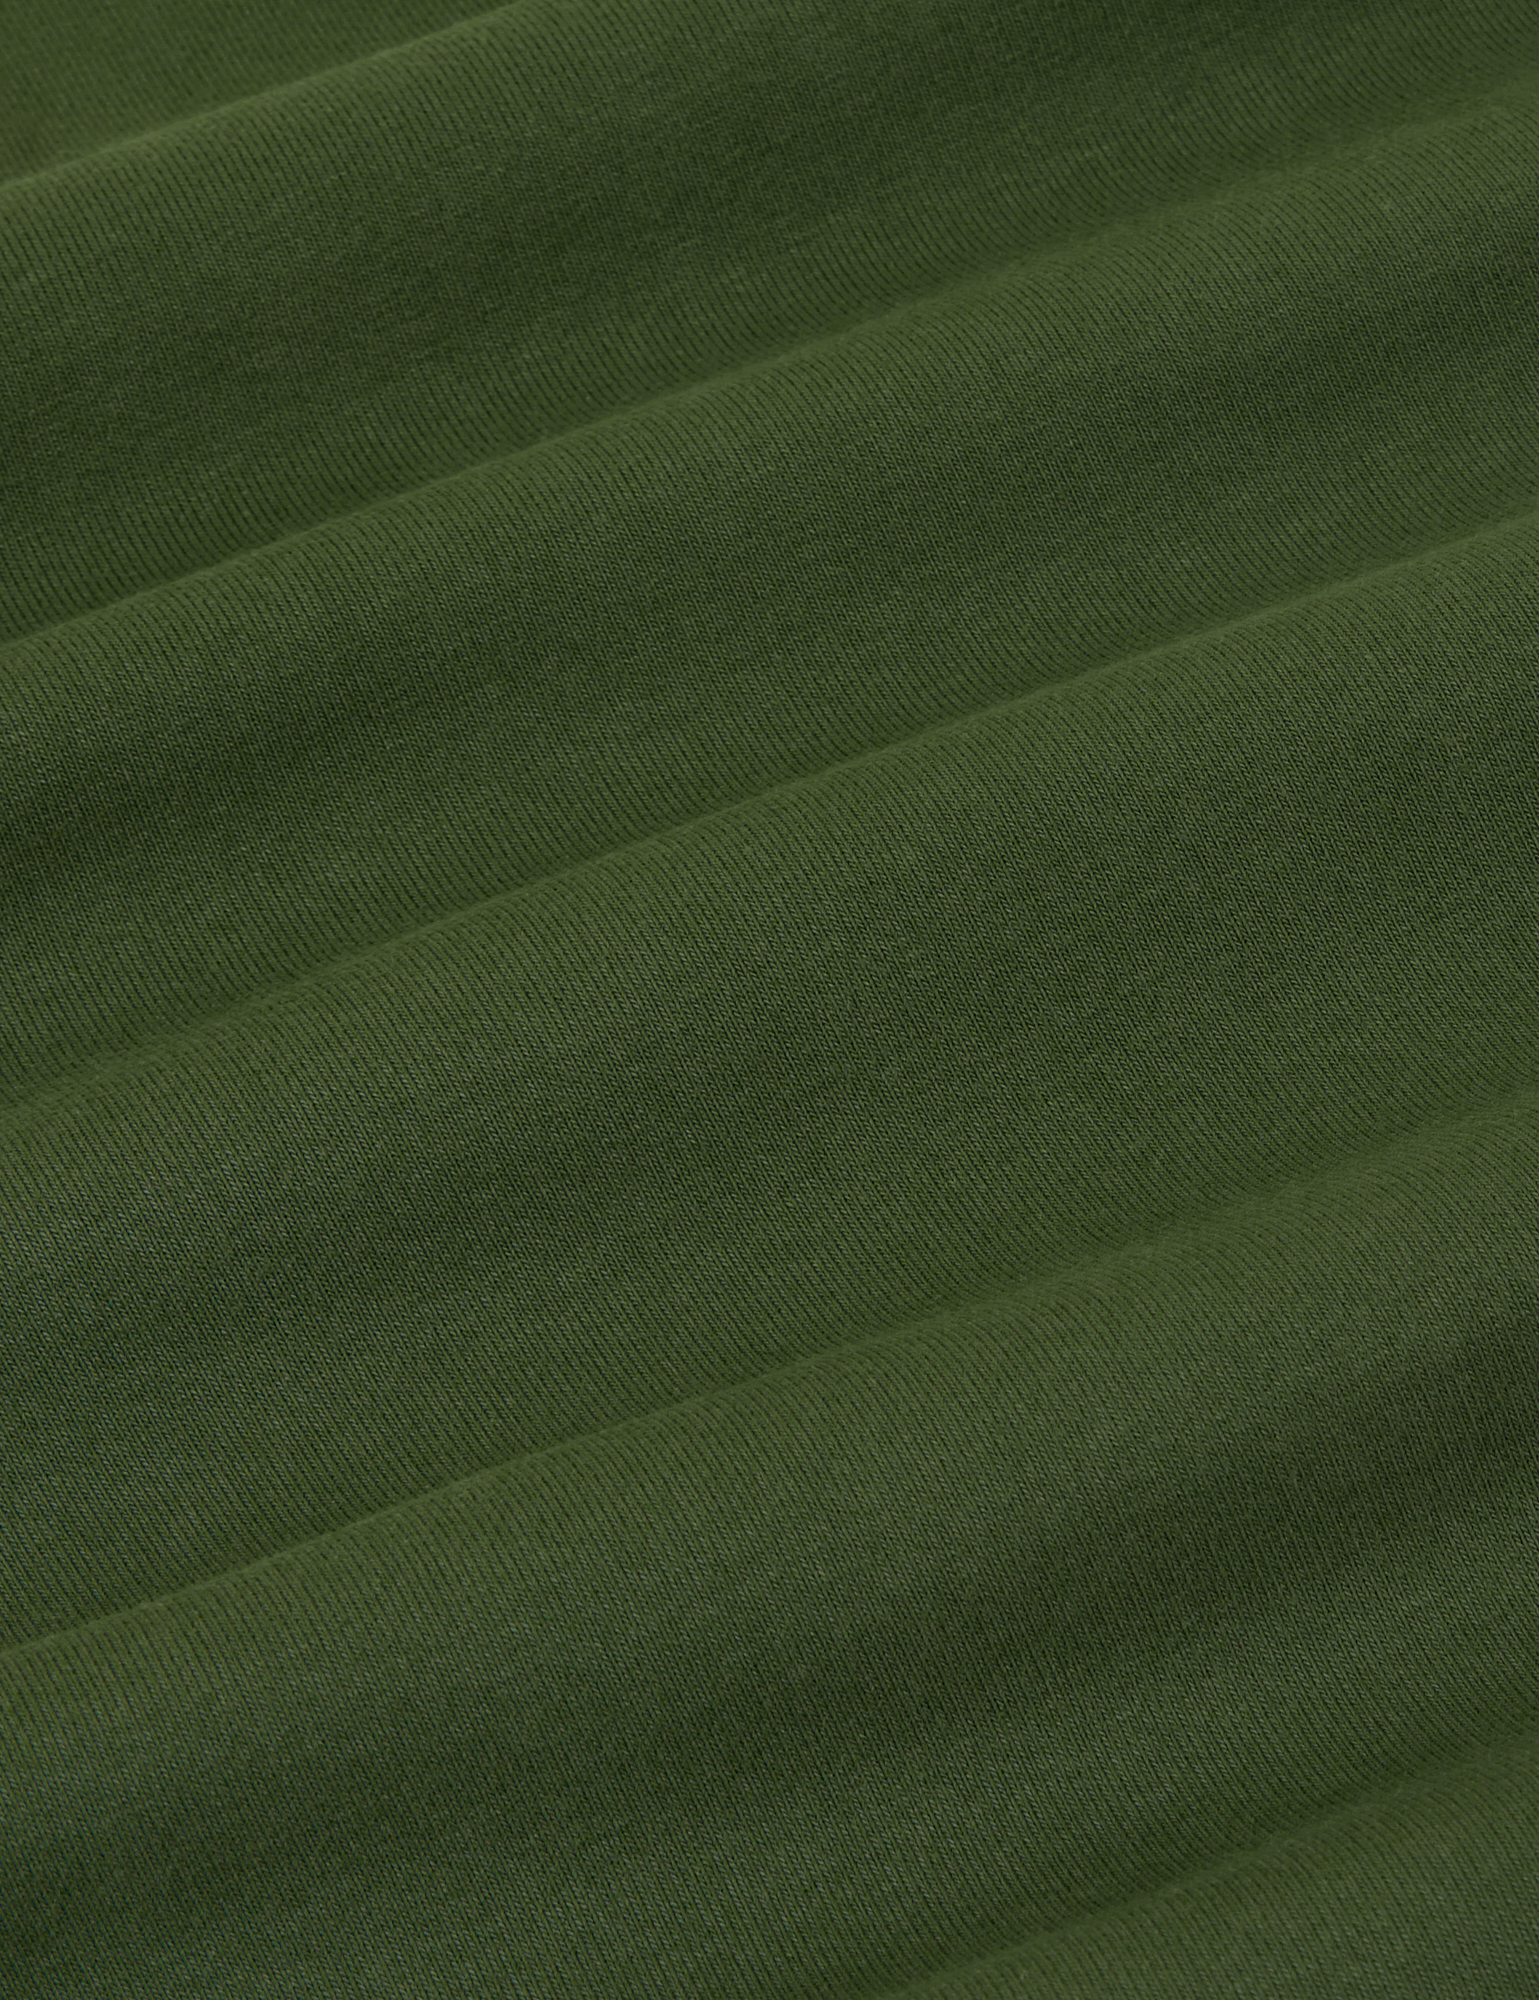 Tank Top in Dark Emerald Green fabric detail close up